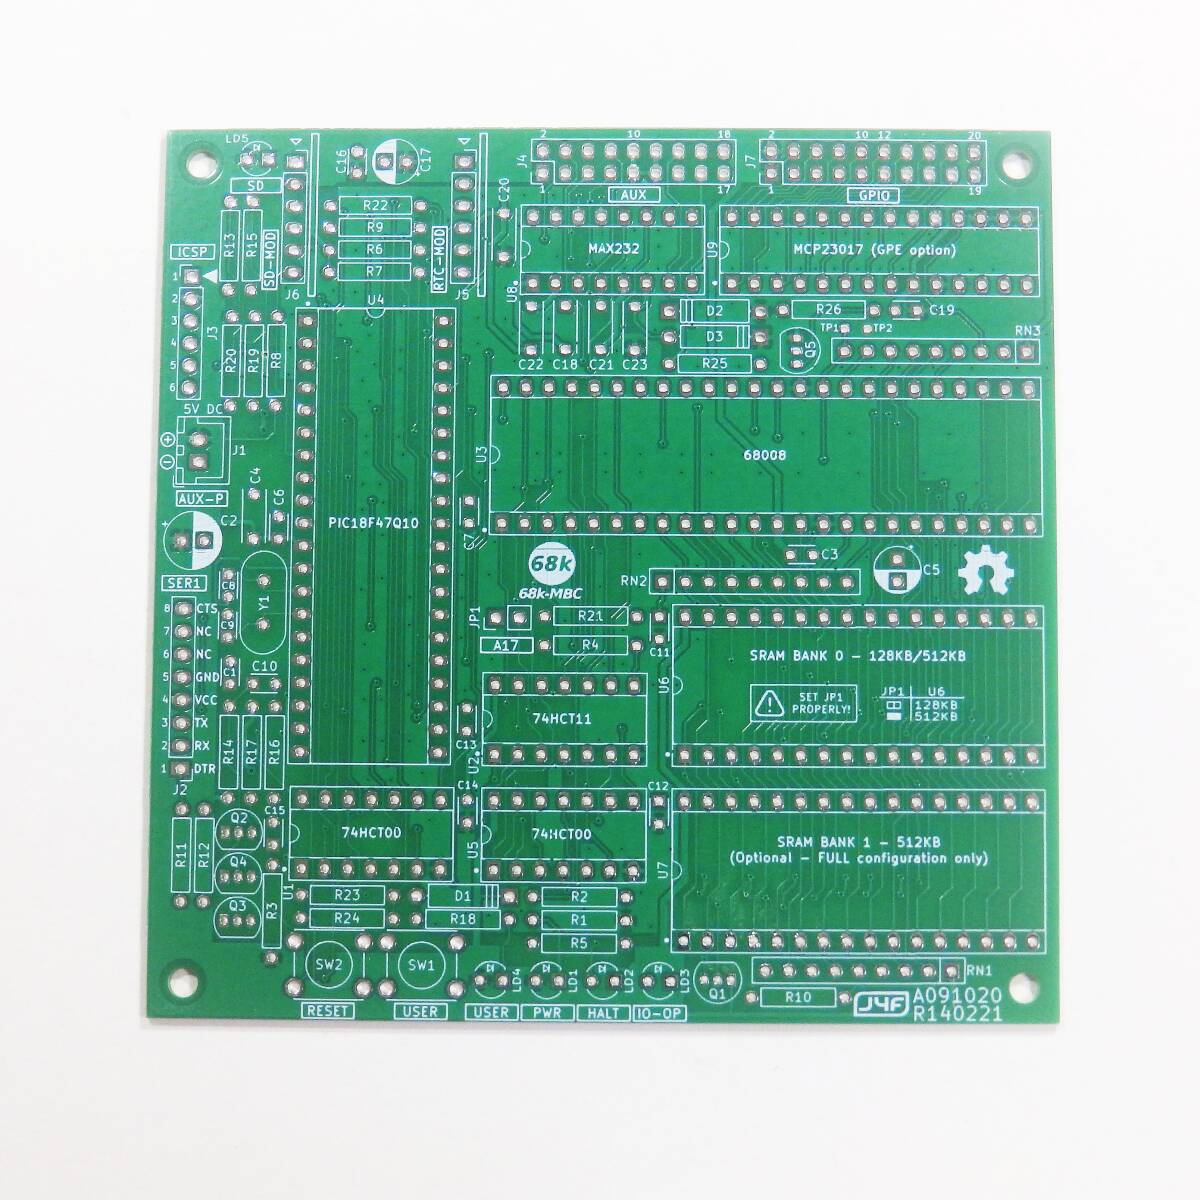 68K-MBC プリント基板 緑 ICソケット6ピンXHセット マイコンボード 電子工作 CPU CP/M モトローラ MC 68008 PIC18F47Q10 MAX232 eb9ebの画像2